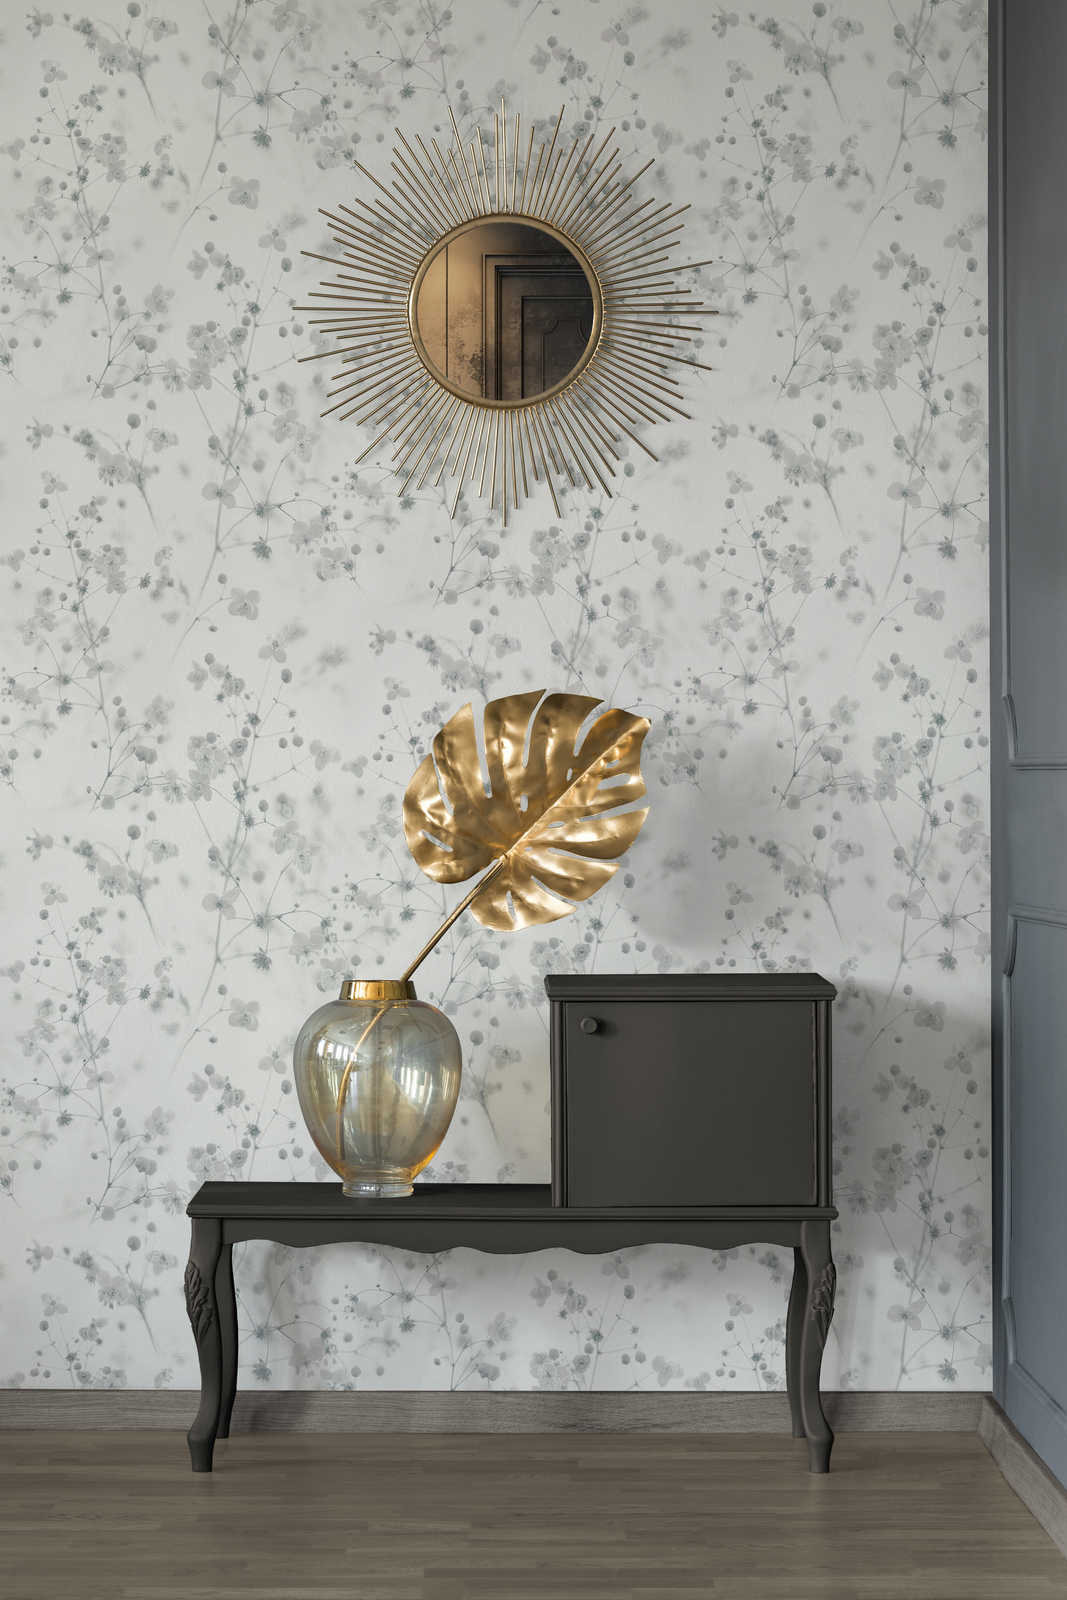             Papel pintado floral gris de estilo rústico moderno
        